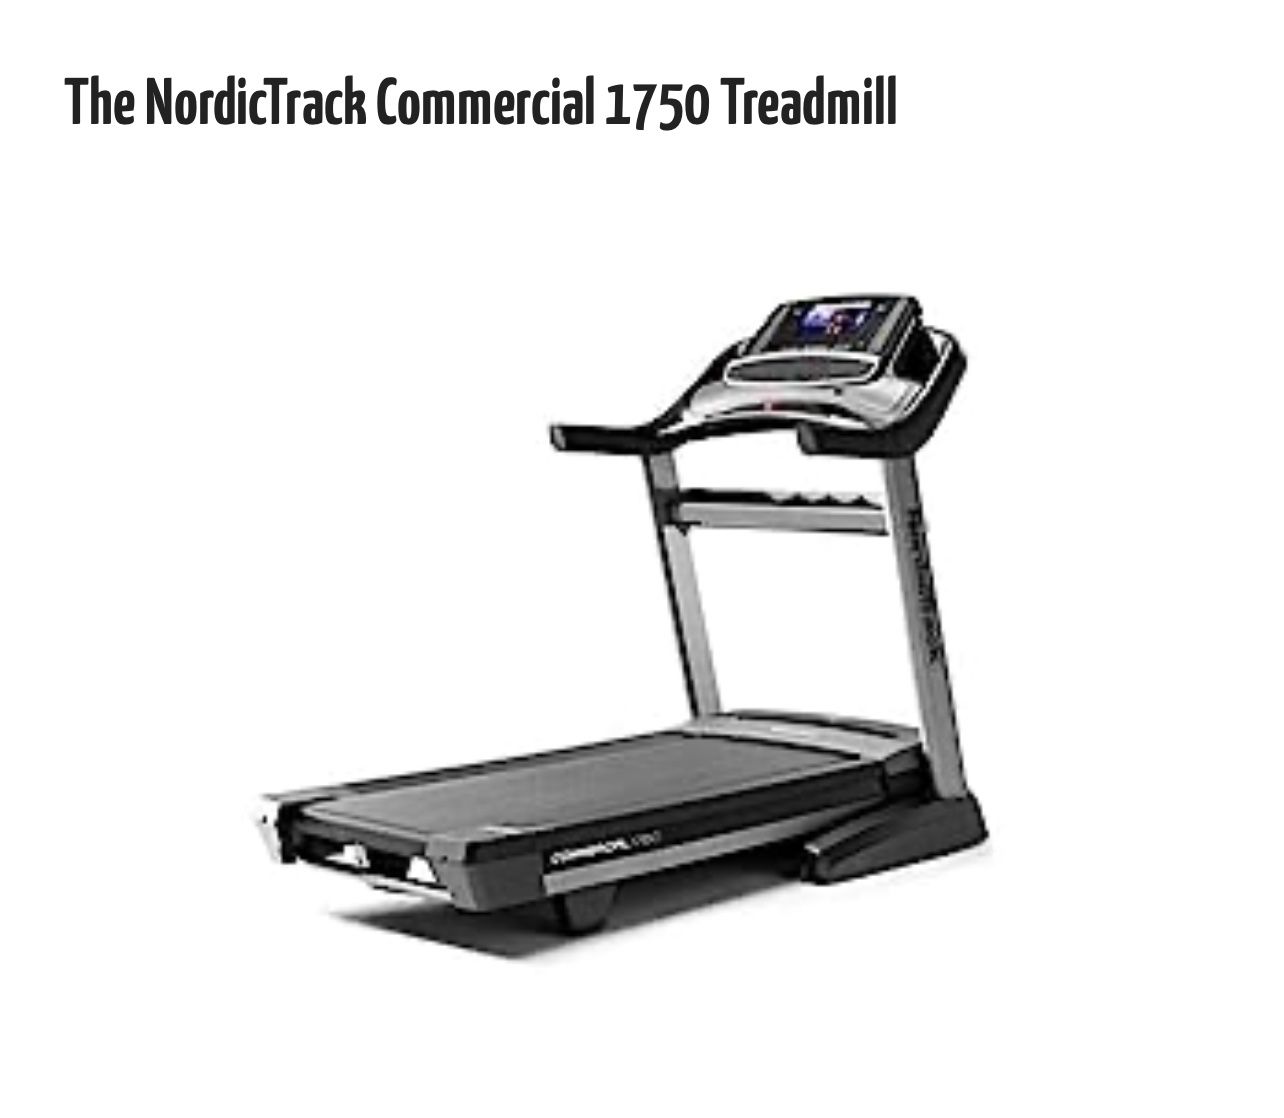 NordicTrack’s Commercial 1750 Treadmill